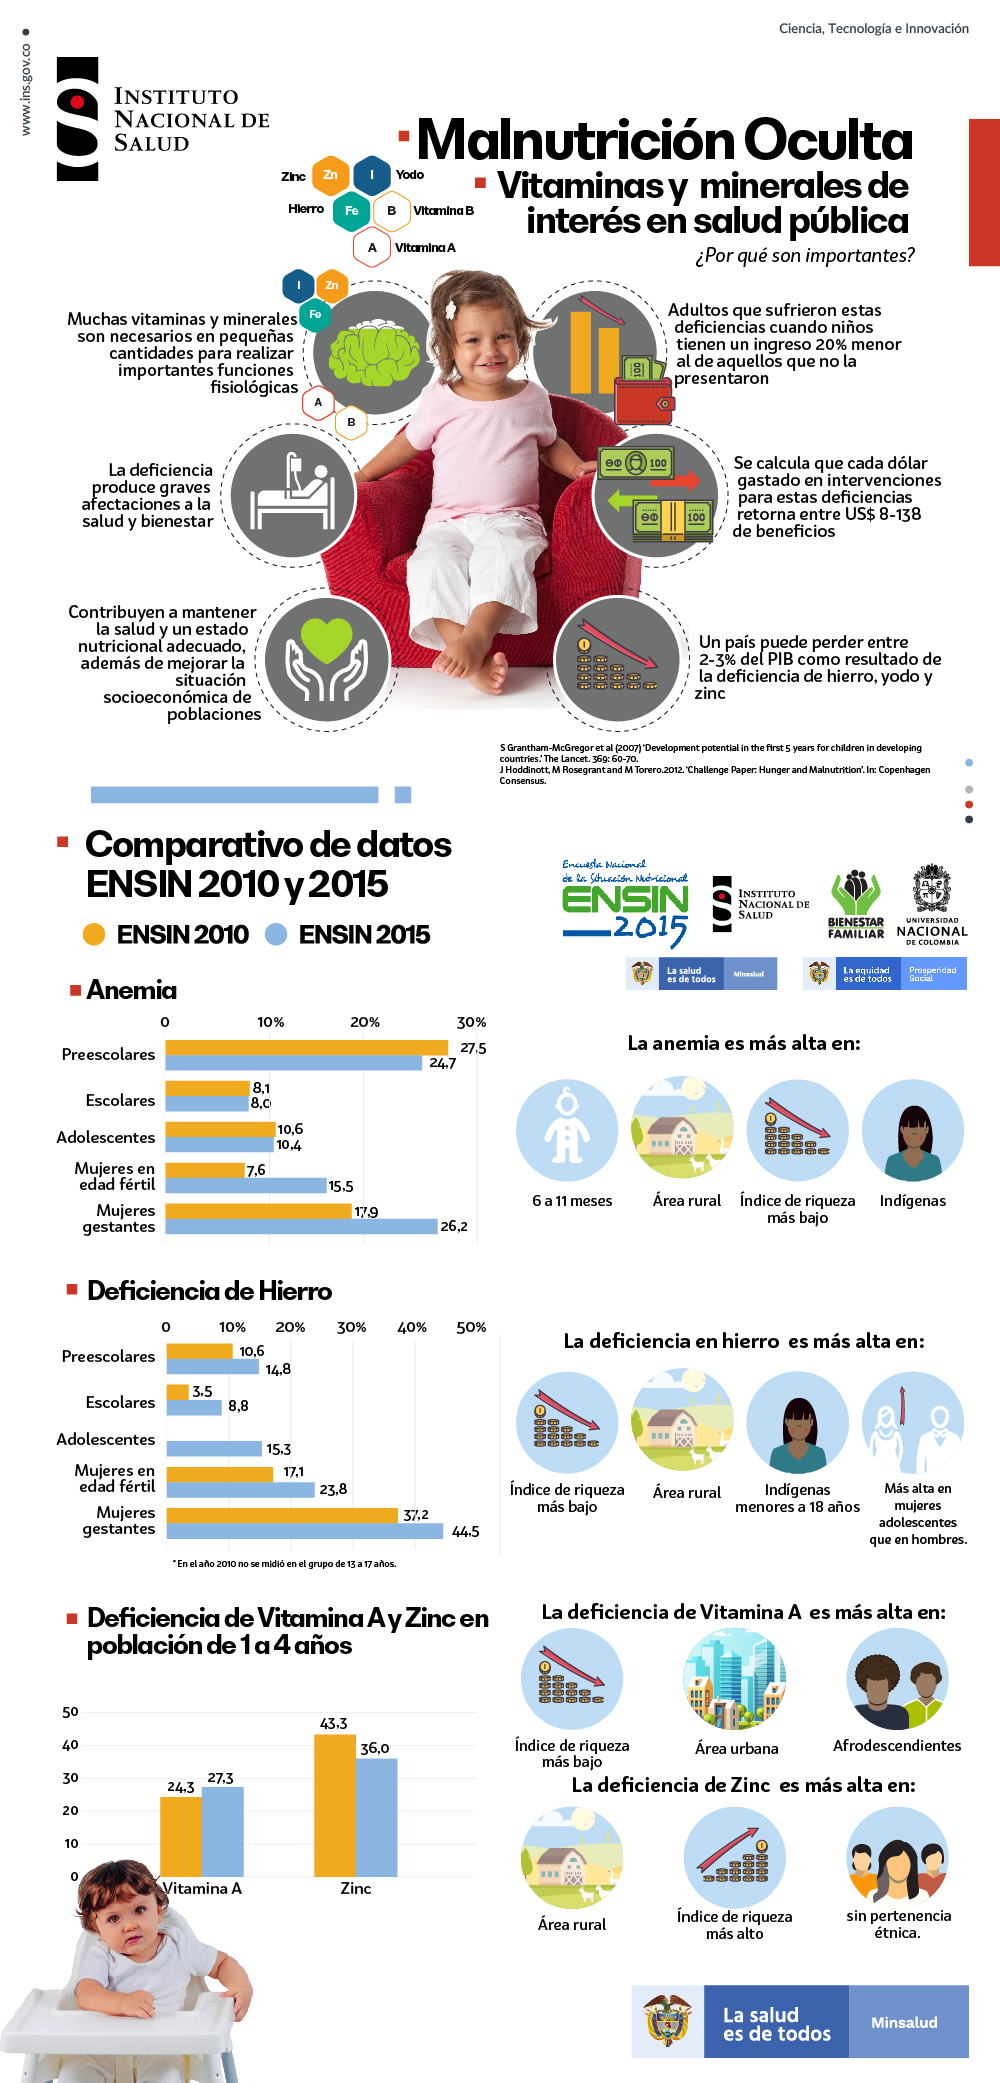 https://www.ins.gov.co/Noticias/PublishingImages/Paginas/Malnutricion-oculta-colombia/INS-instituto-nacional-salud-colombia-malnutircion-oculta-colombia-infografia.jpg